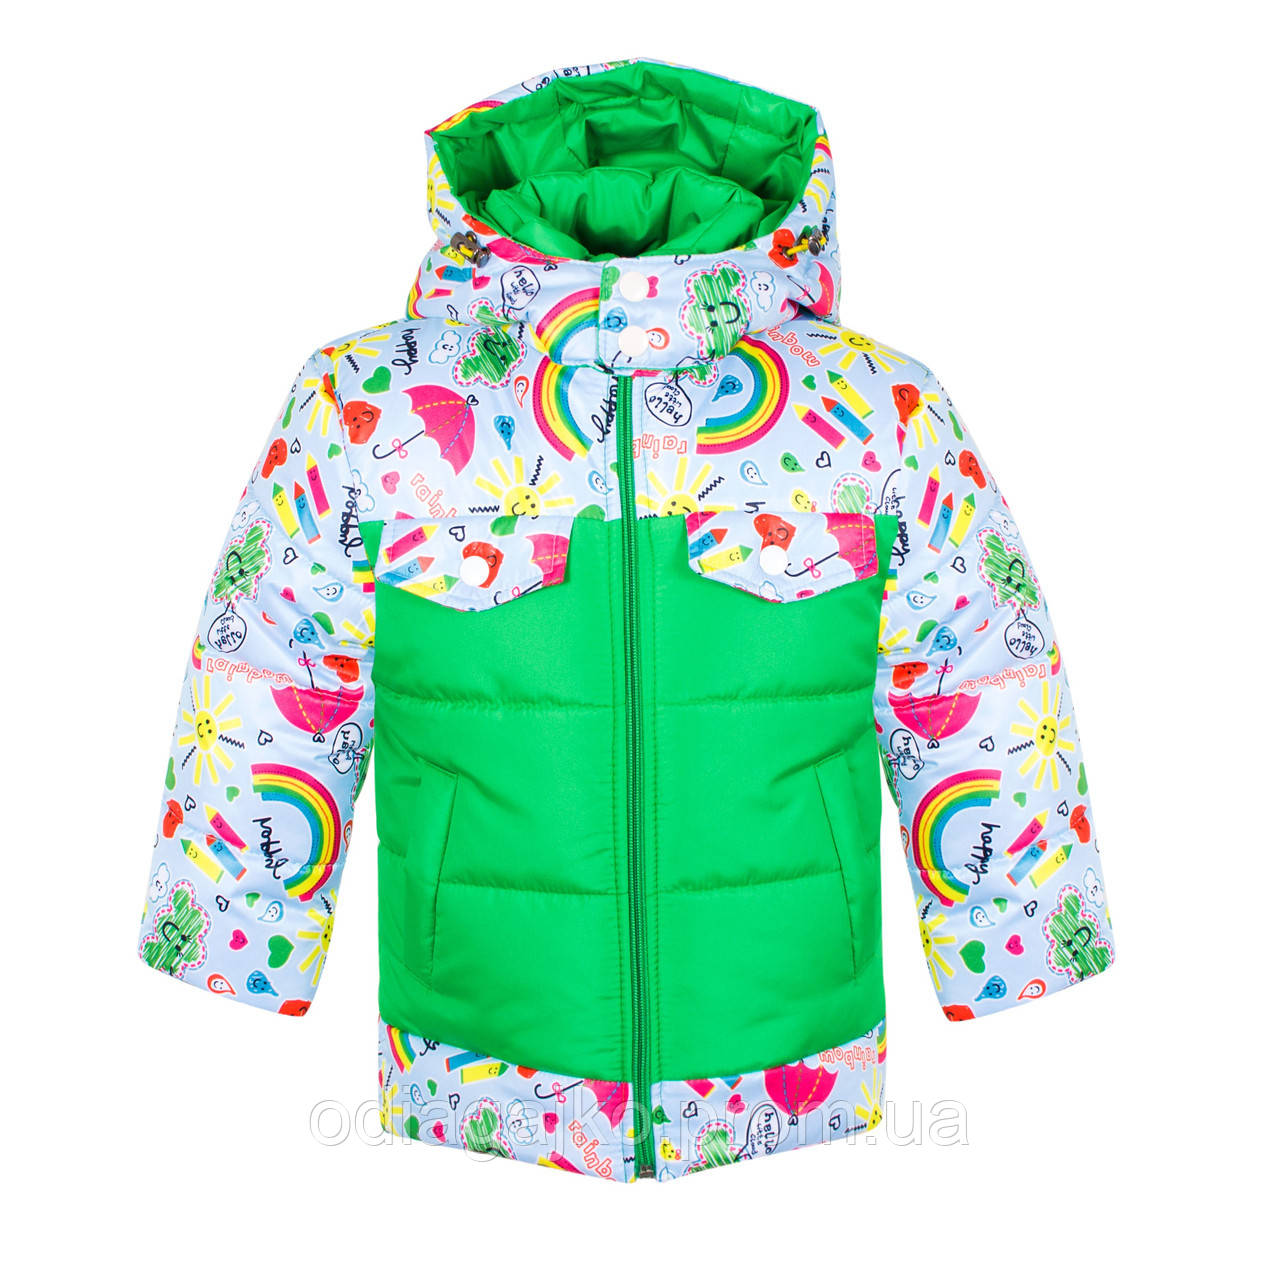 Куртка дитяча для хлопчика Везунчик зелена весна/осінь/зима 86,92,98,104,110 см жилетка-овчина